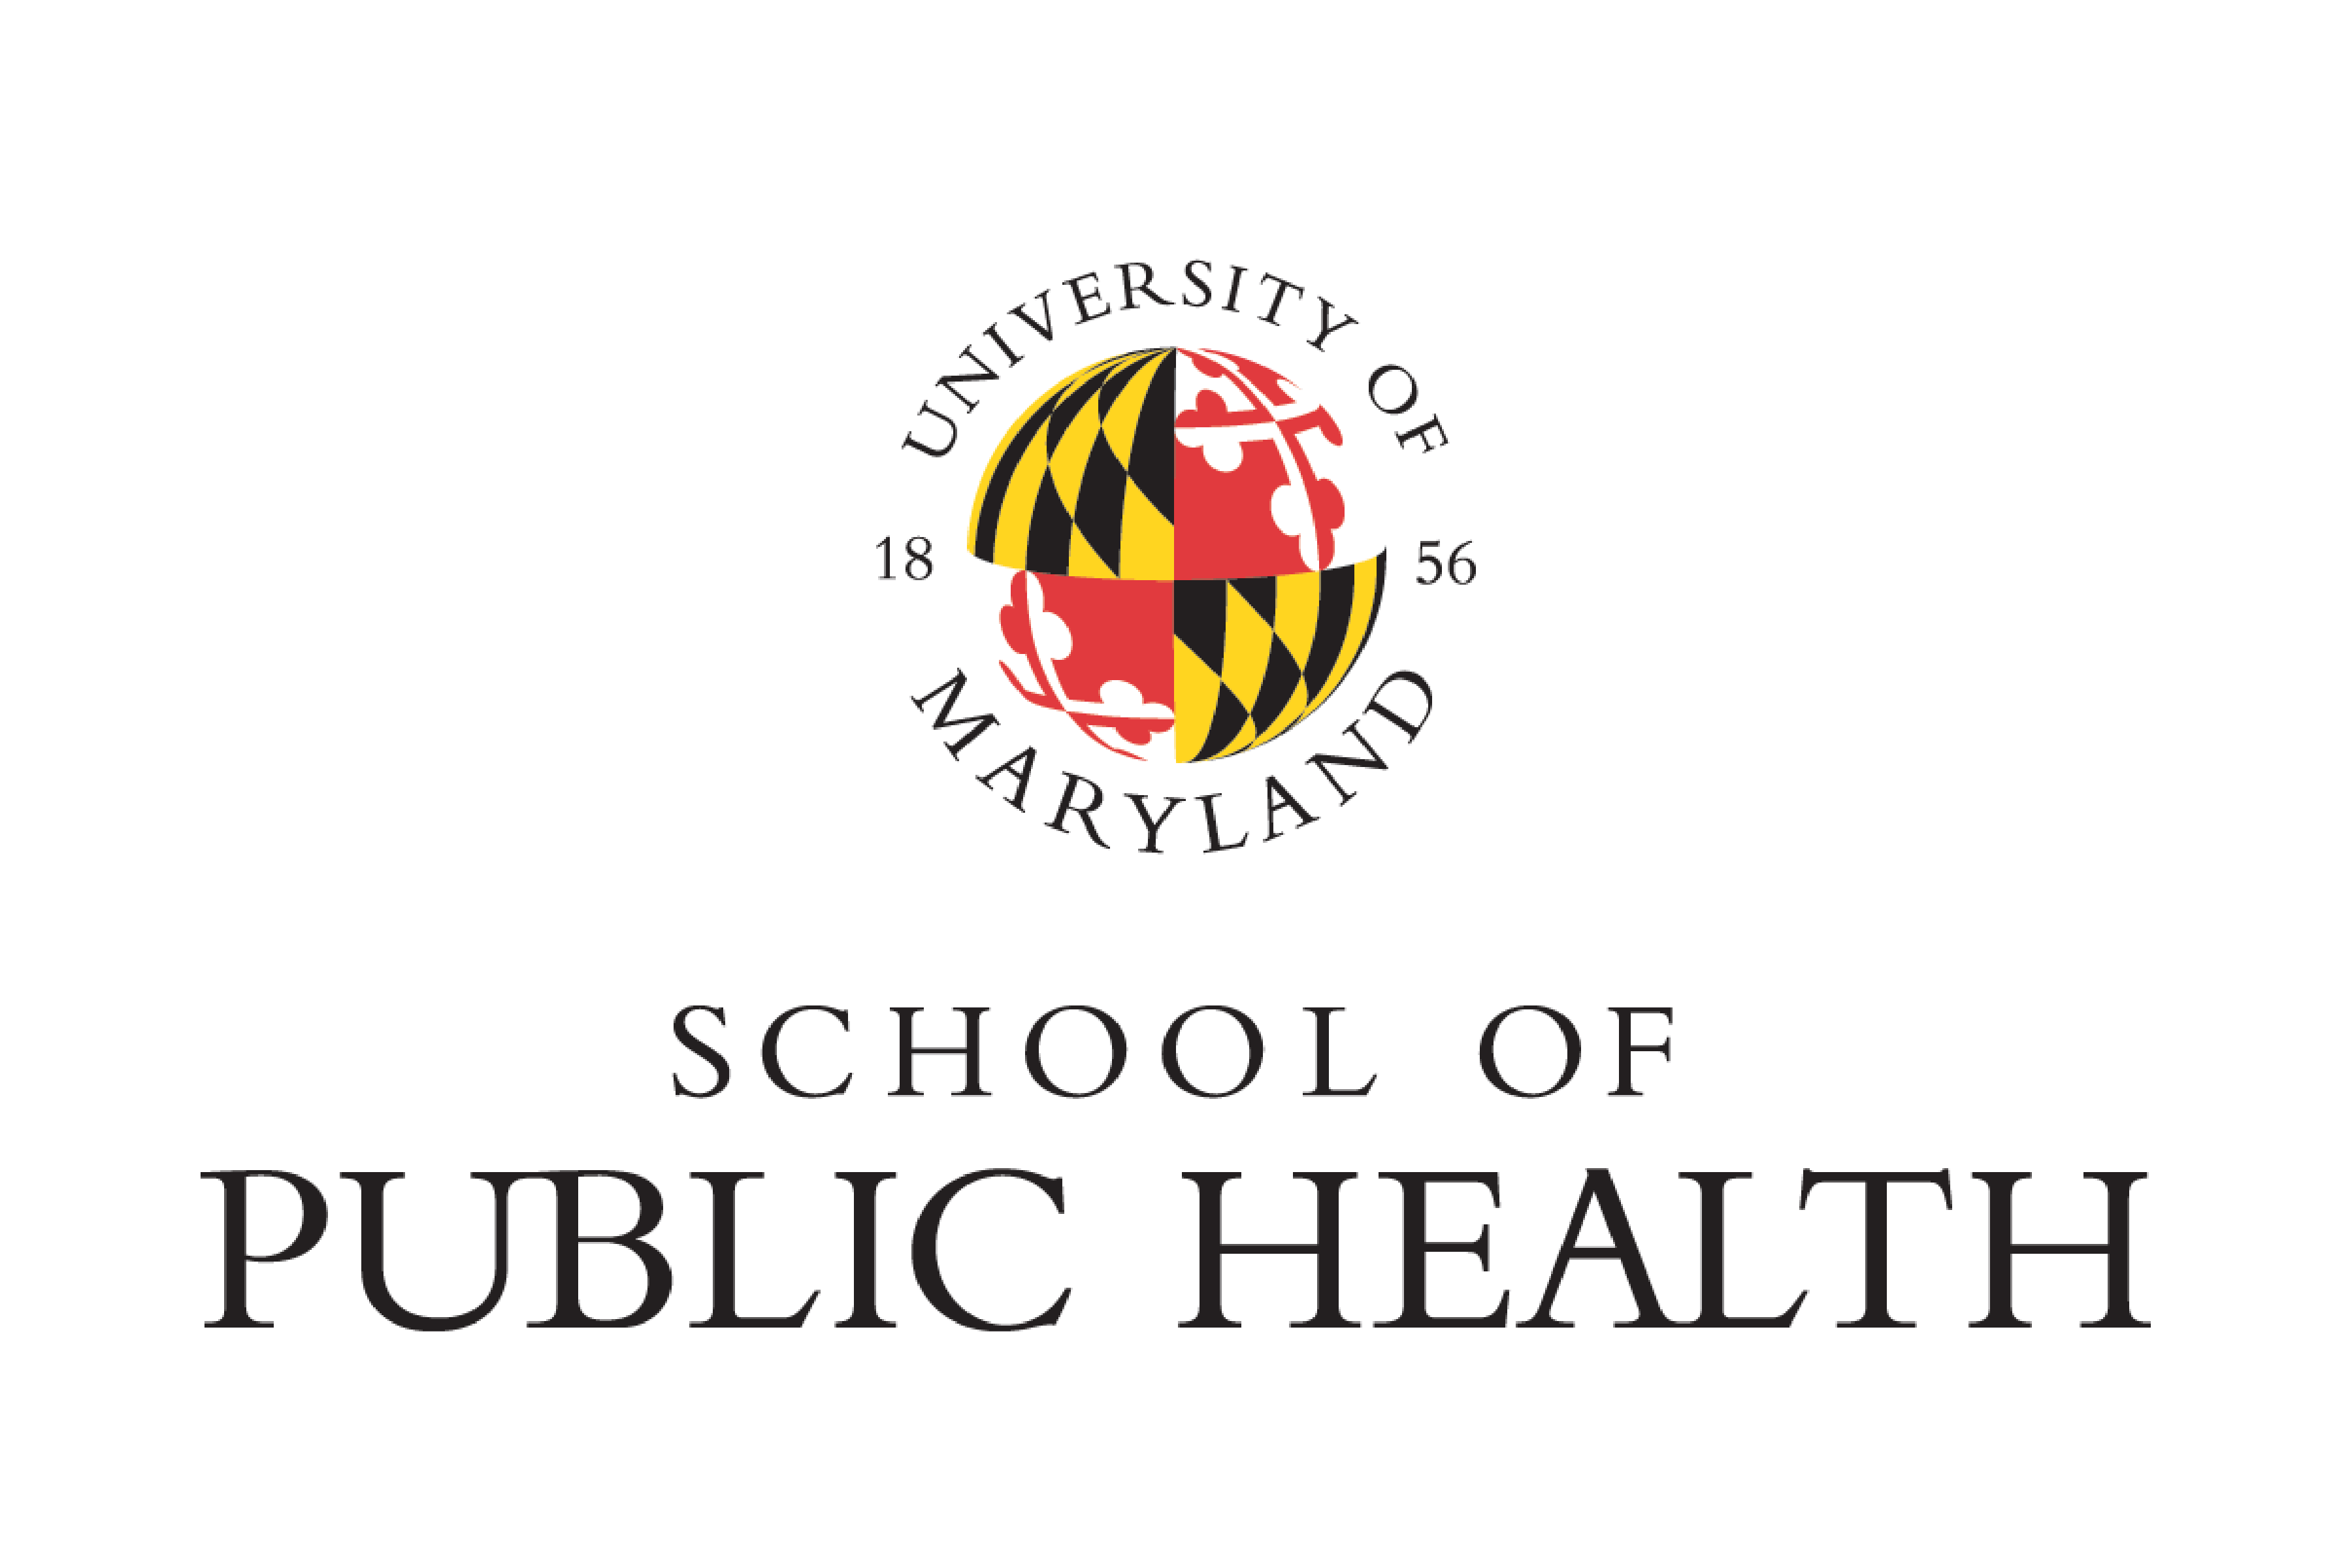 UMD school of public health logo